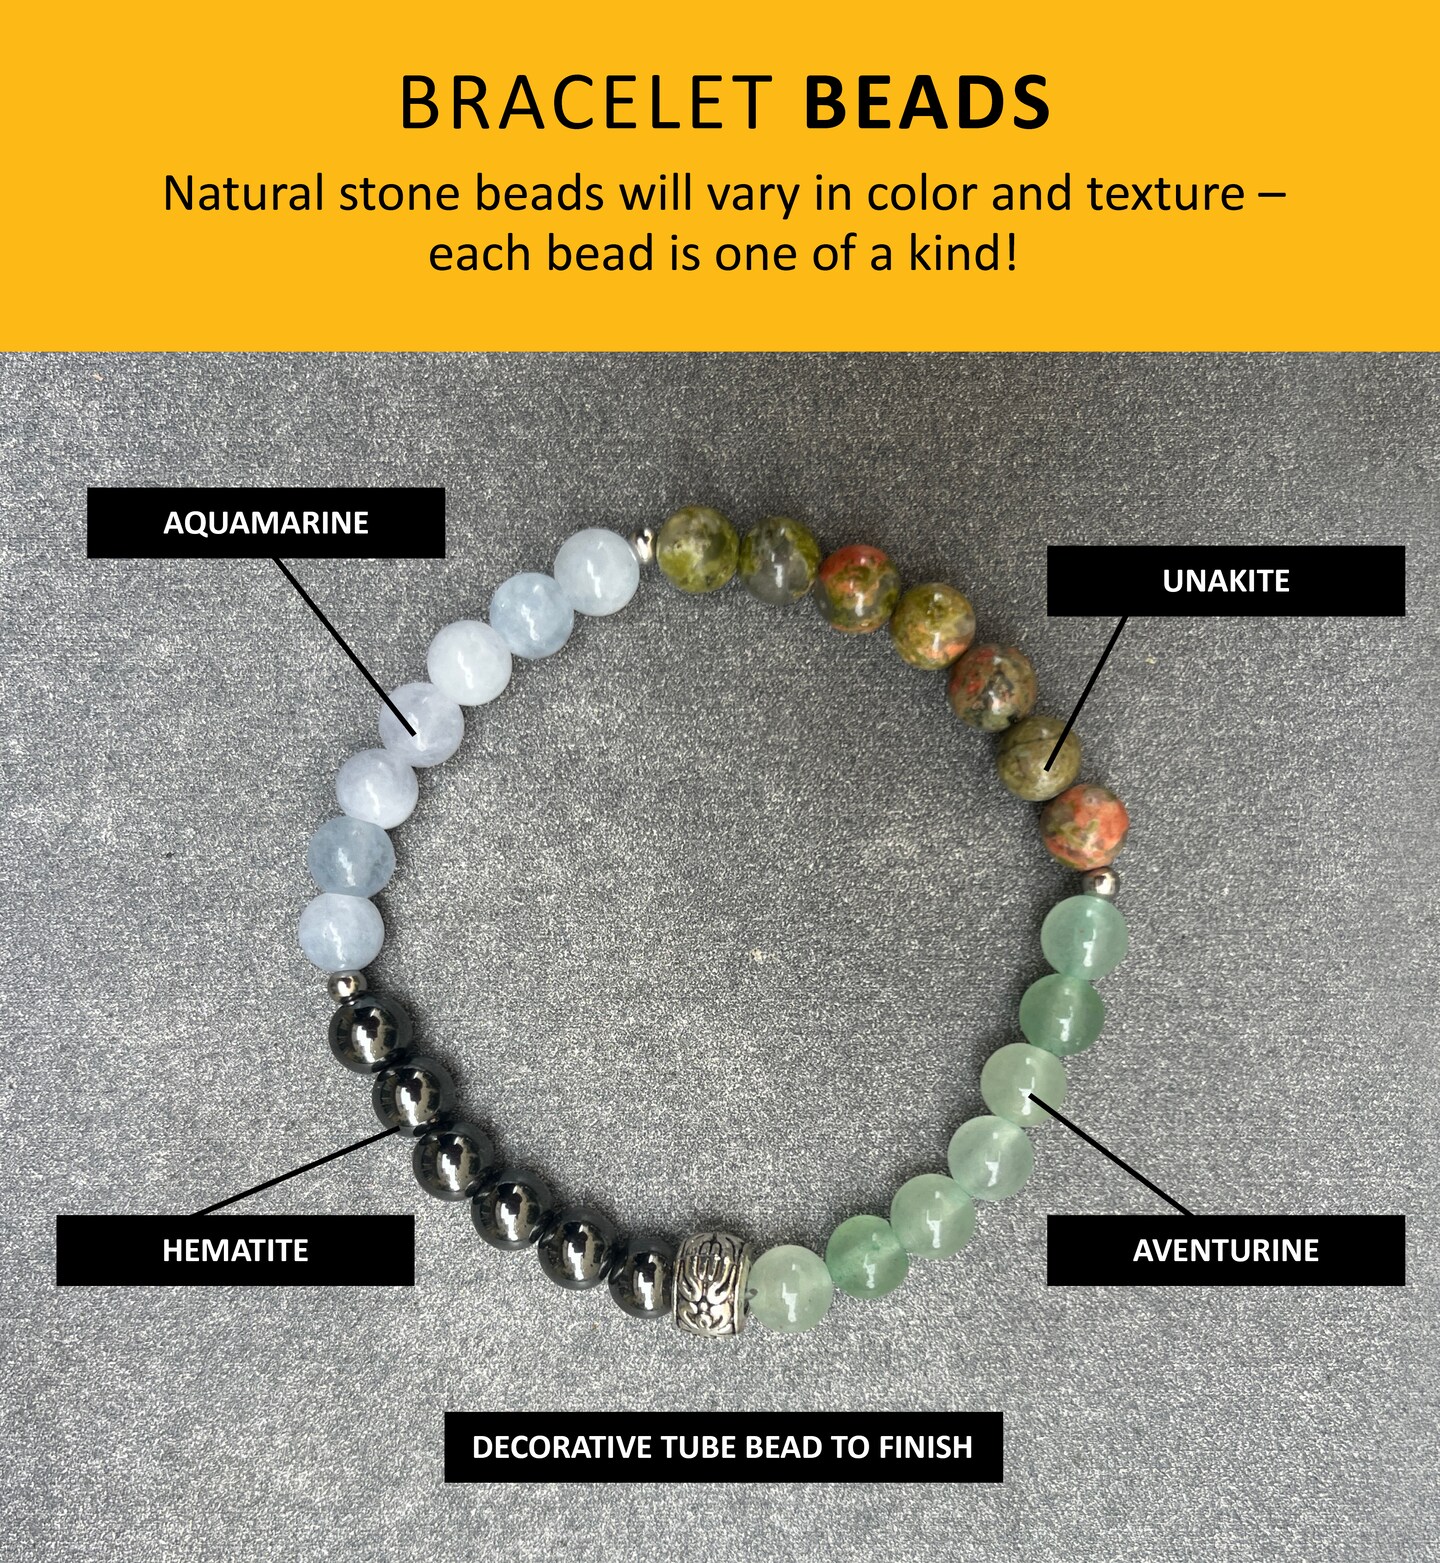 How to Make Friendship Bracelets With Beads | POPSUGAR Smart Living